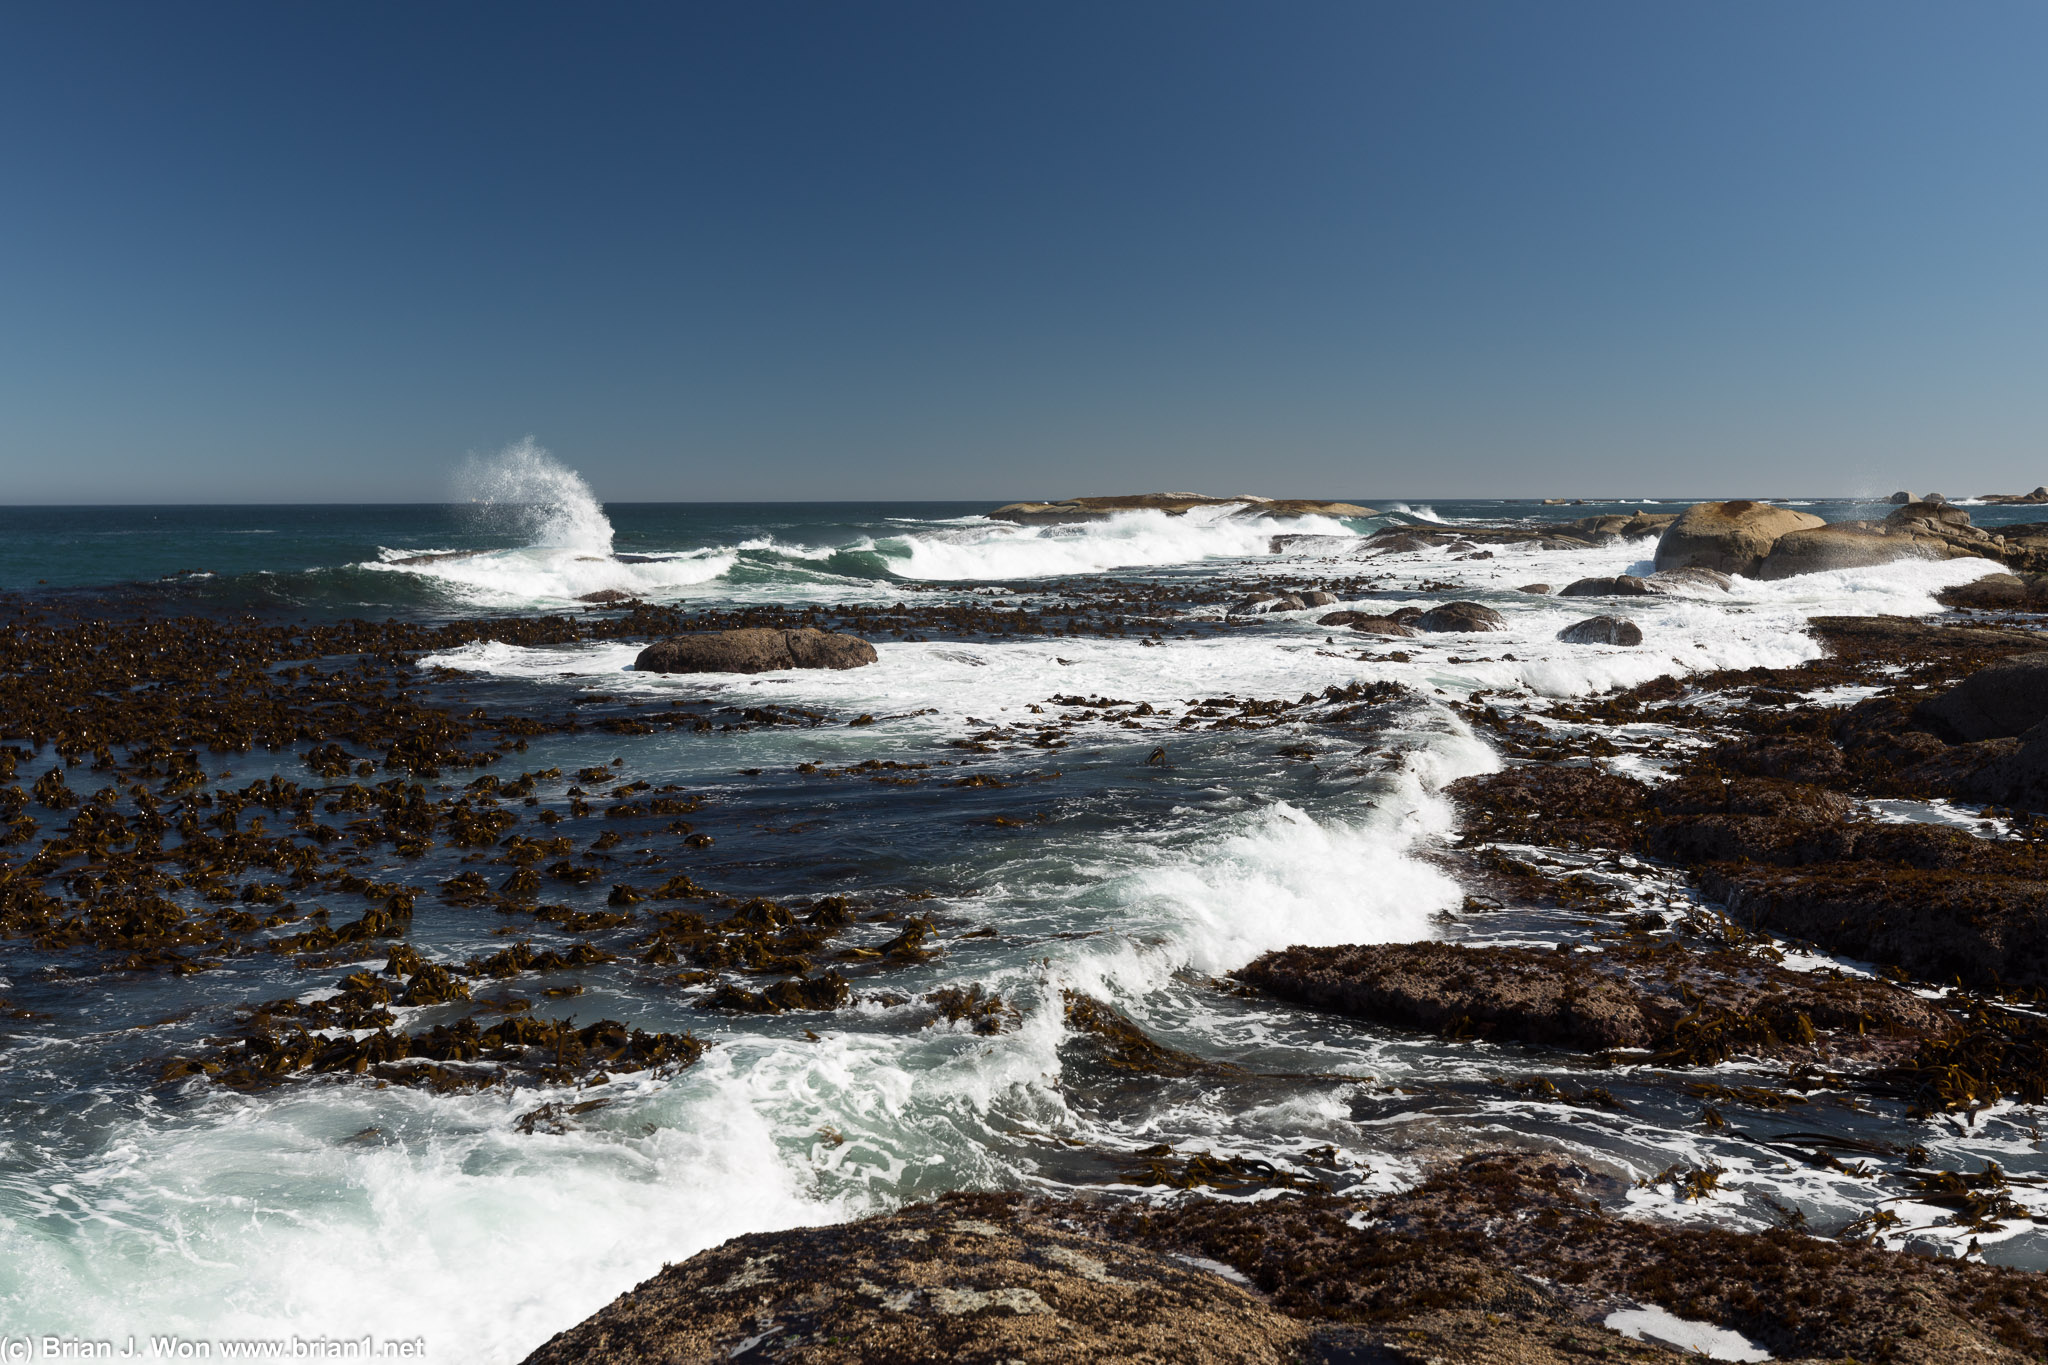 Seaweed and rocks make for a rugged coast.